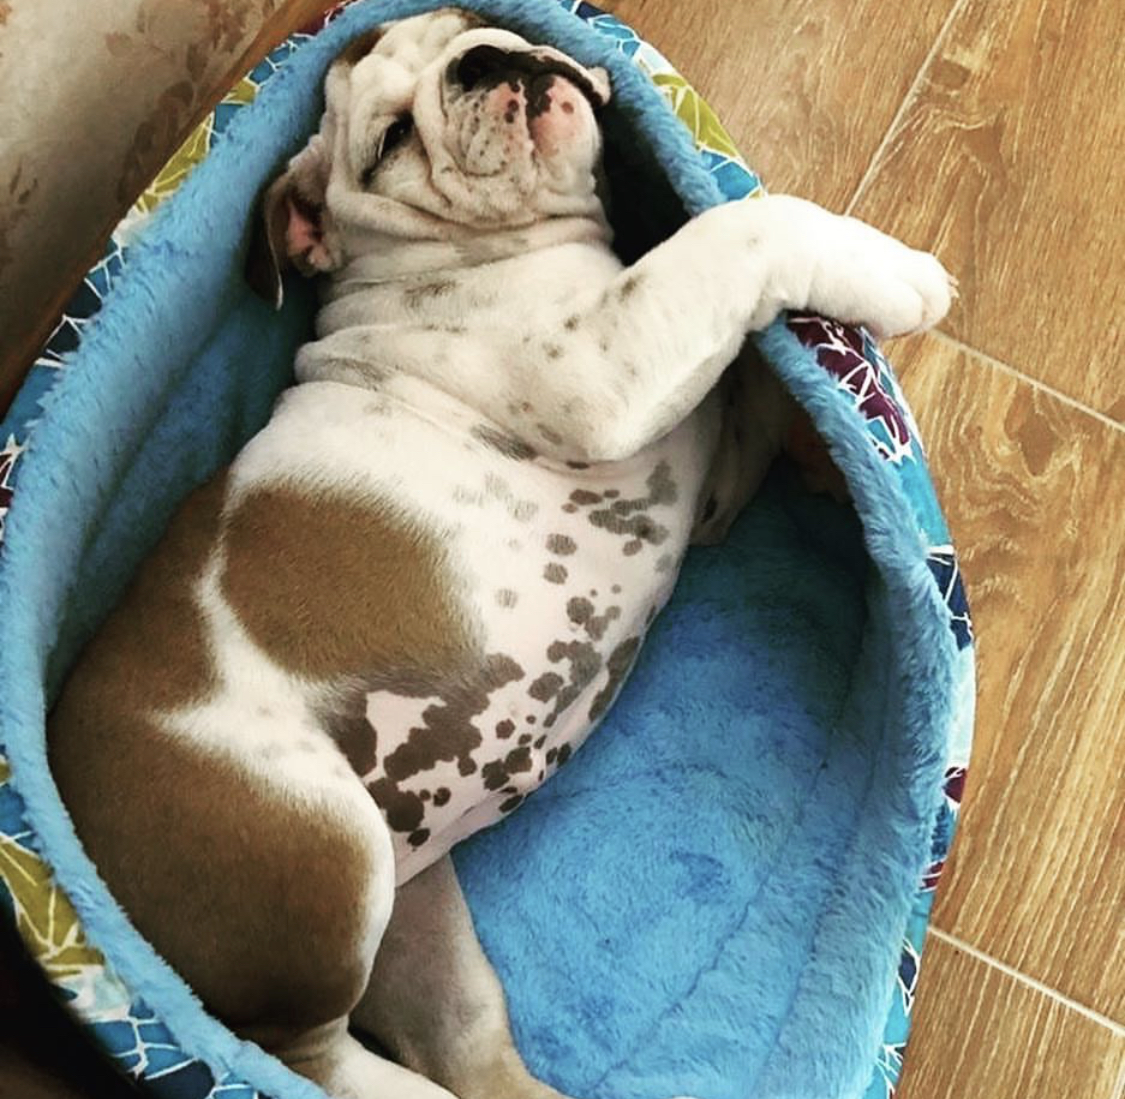 An English Bulldog sleeping soundly on its bed